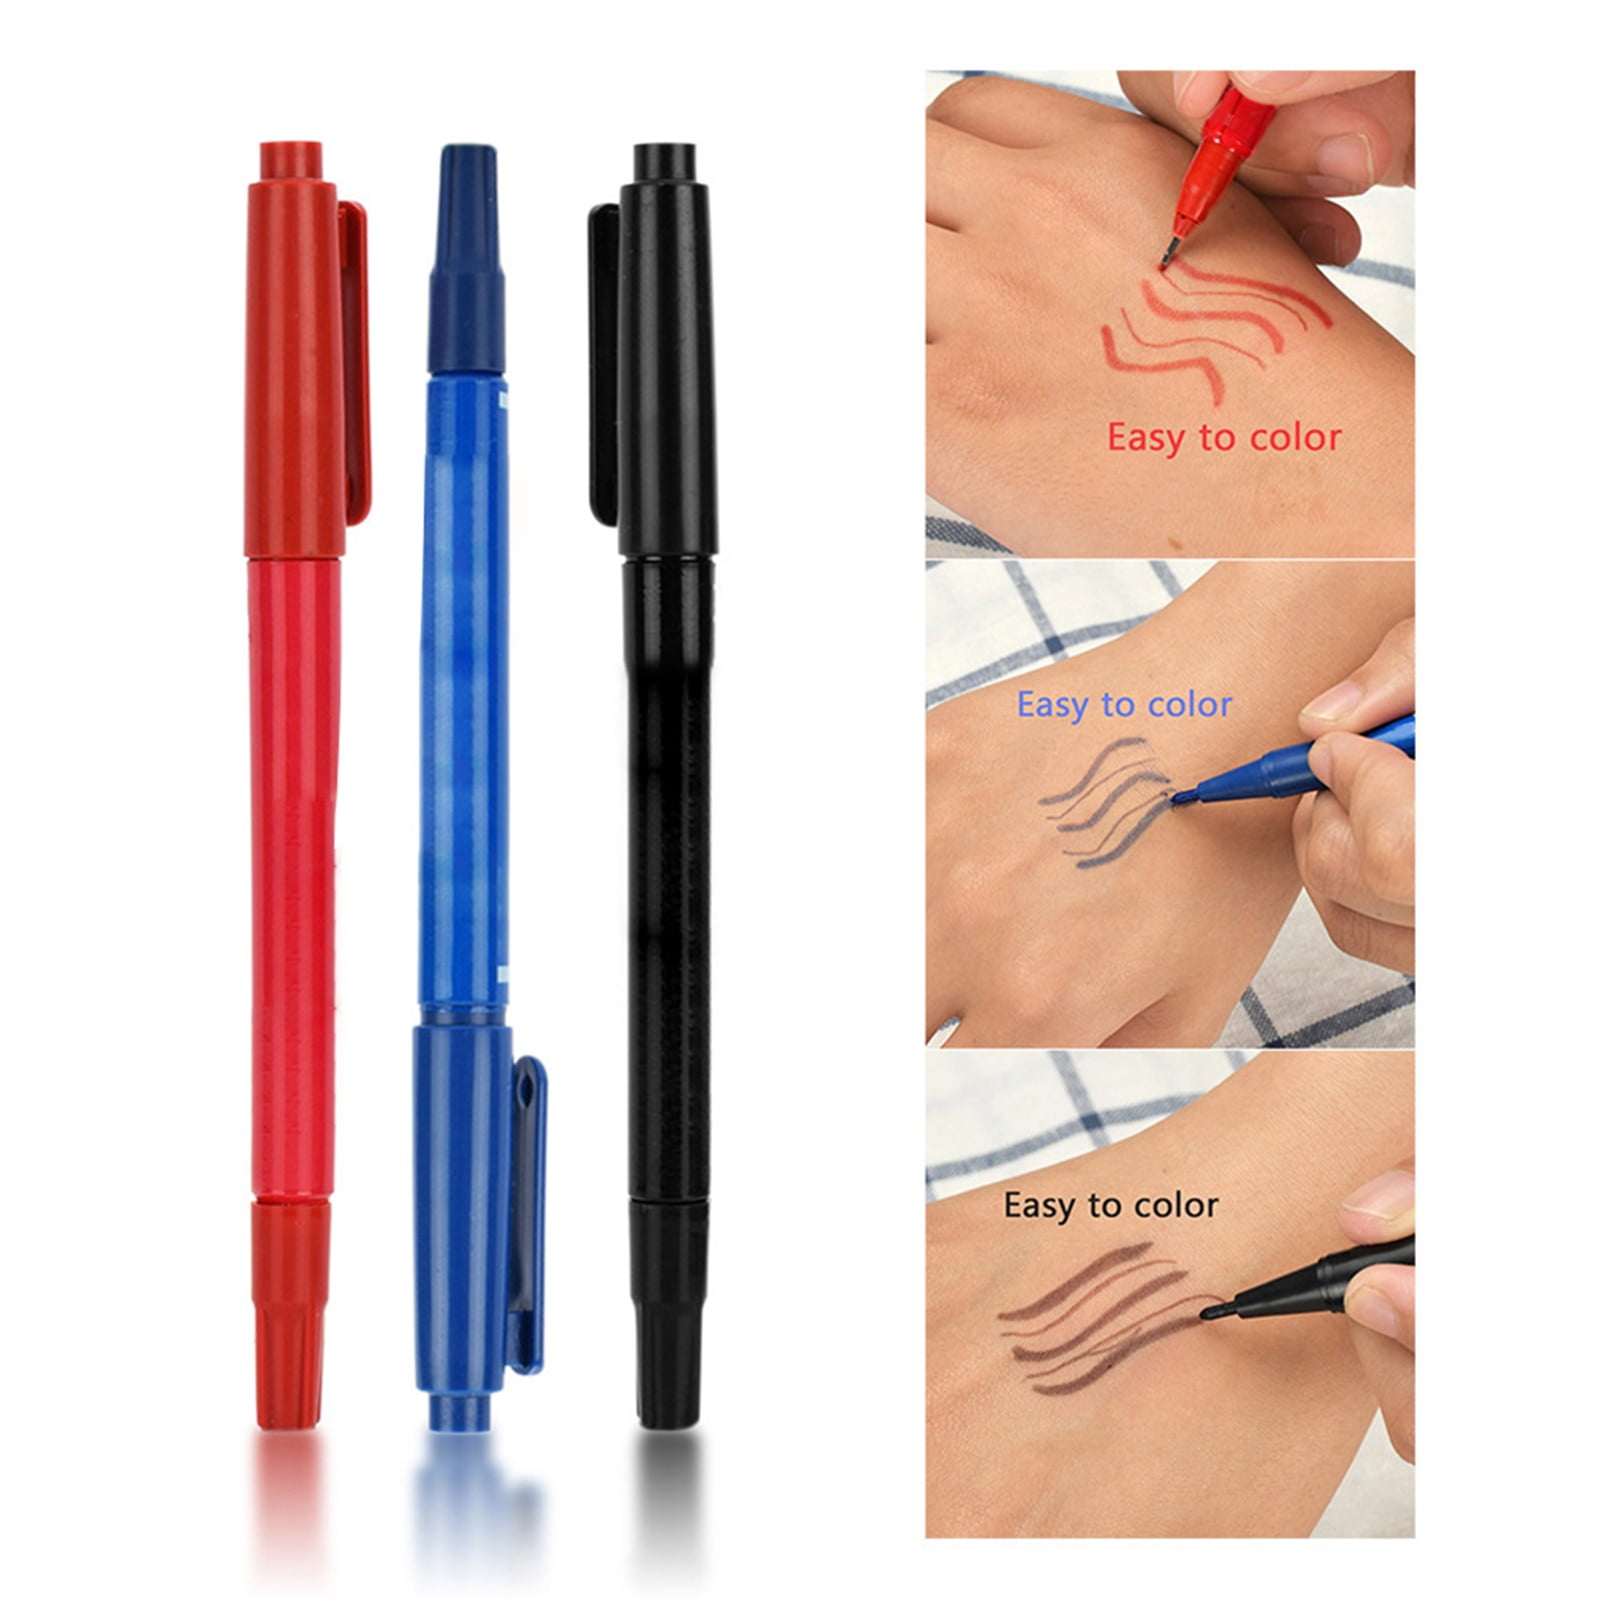 2022 New 6pcs/set Marker Pen Skin Markers Tattoo Piercing Supplies Tool Body  Art Accessories Office School